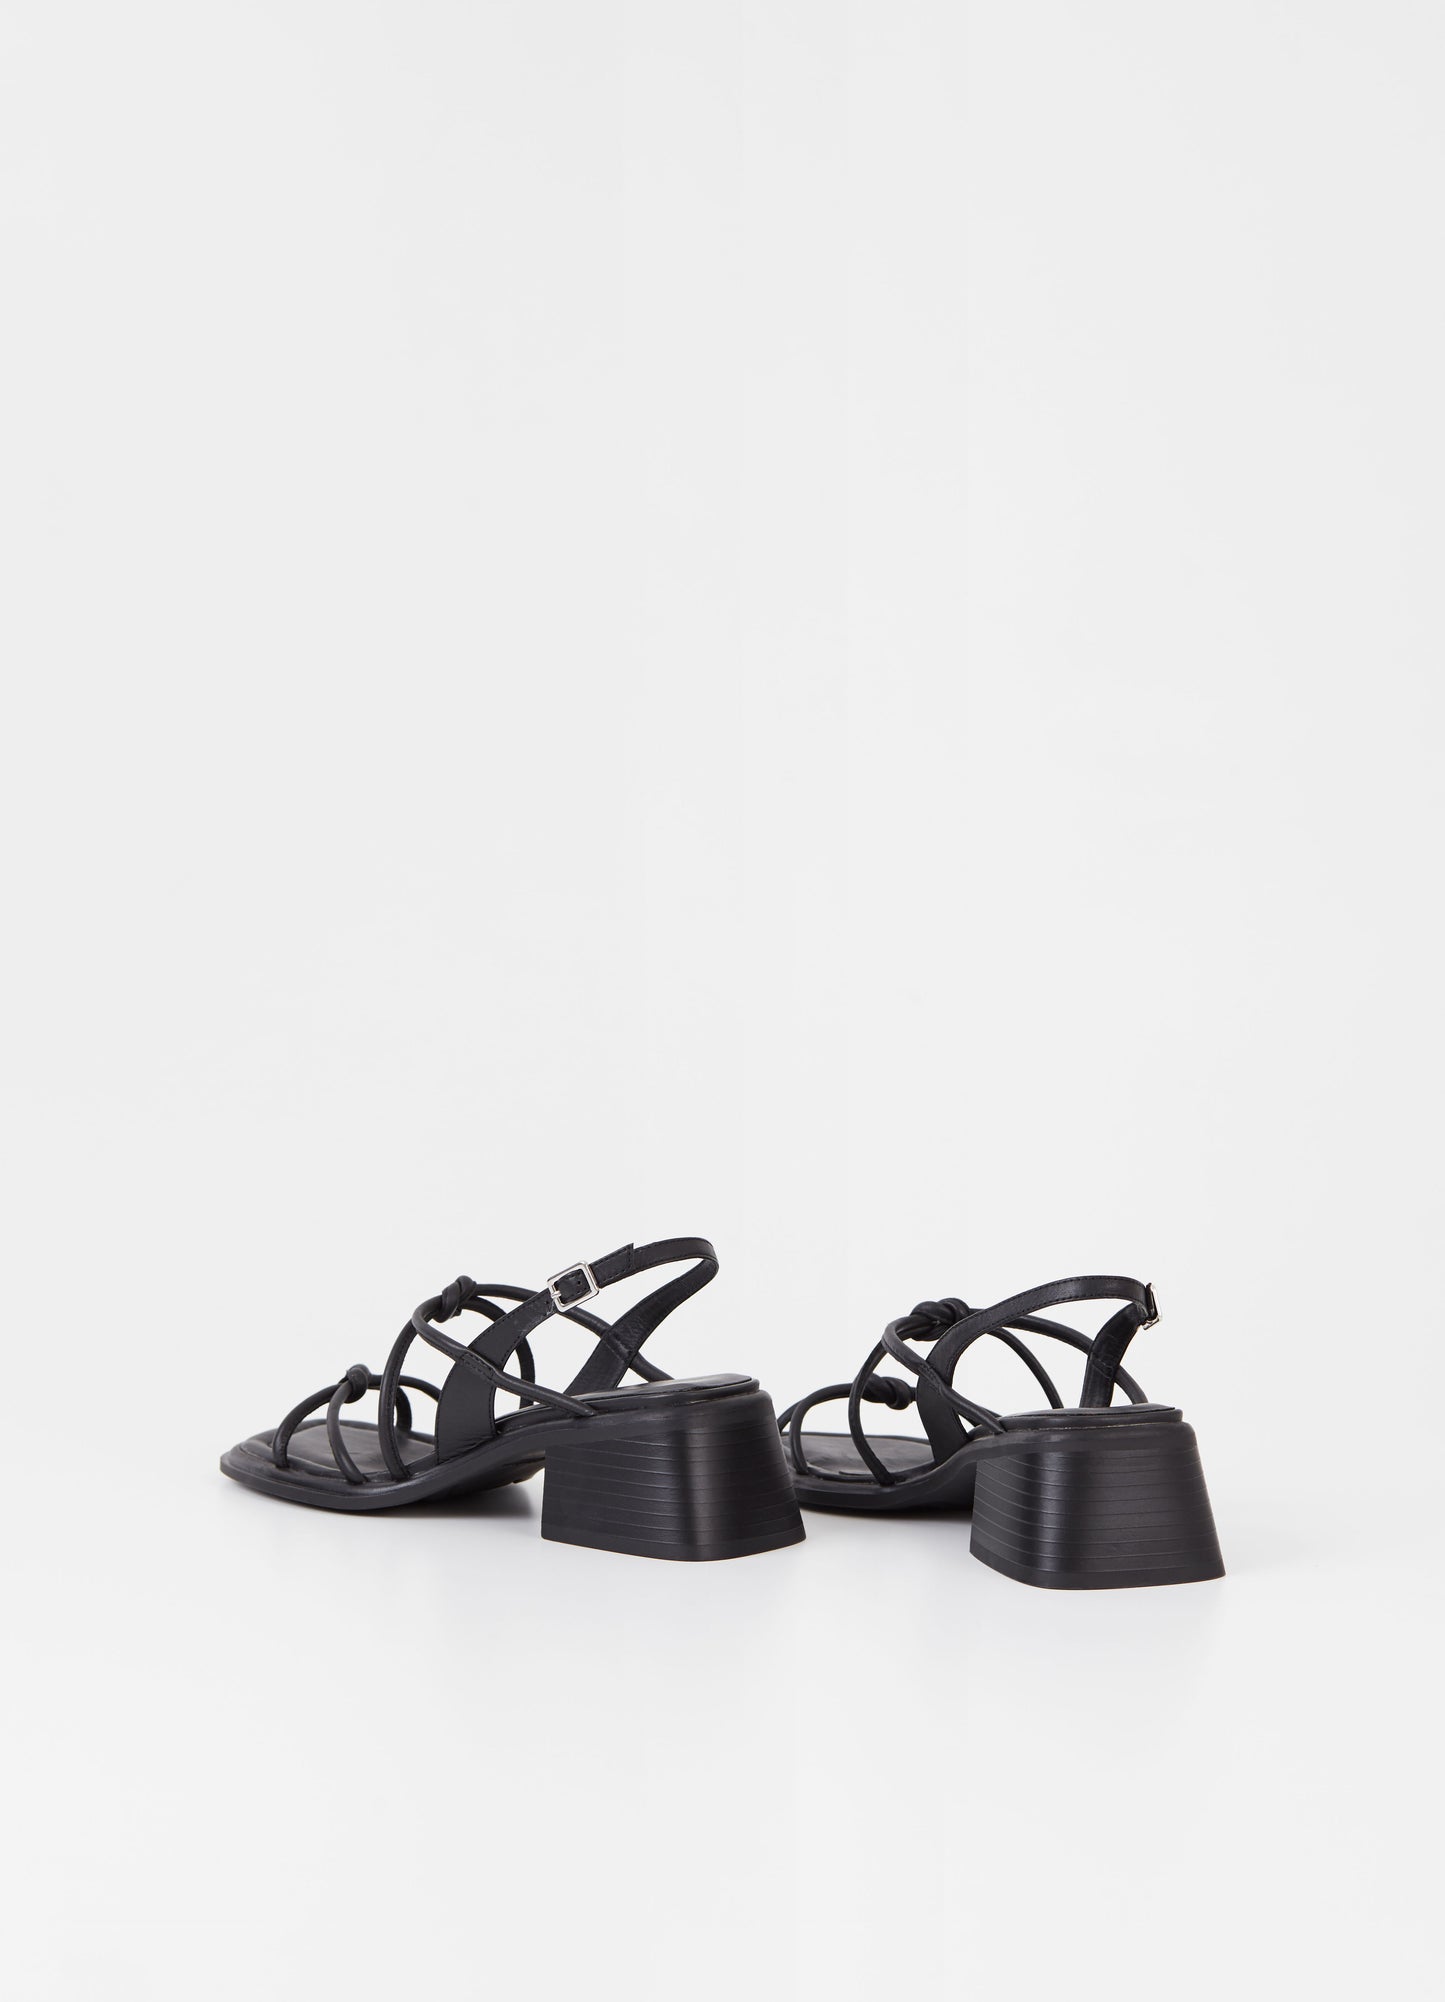 Vagabond - Inés heeled sandal in black leather straps